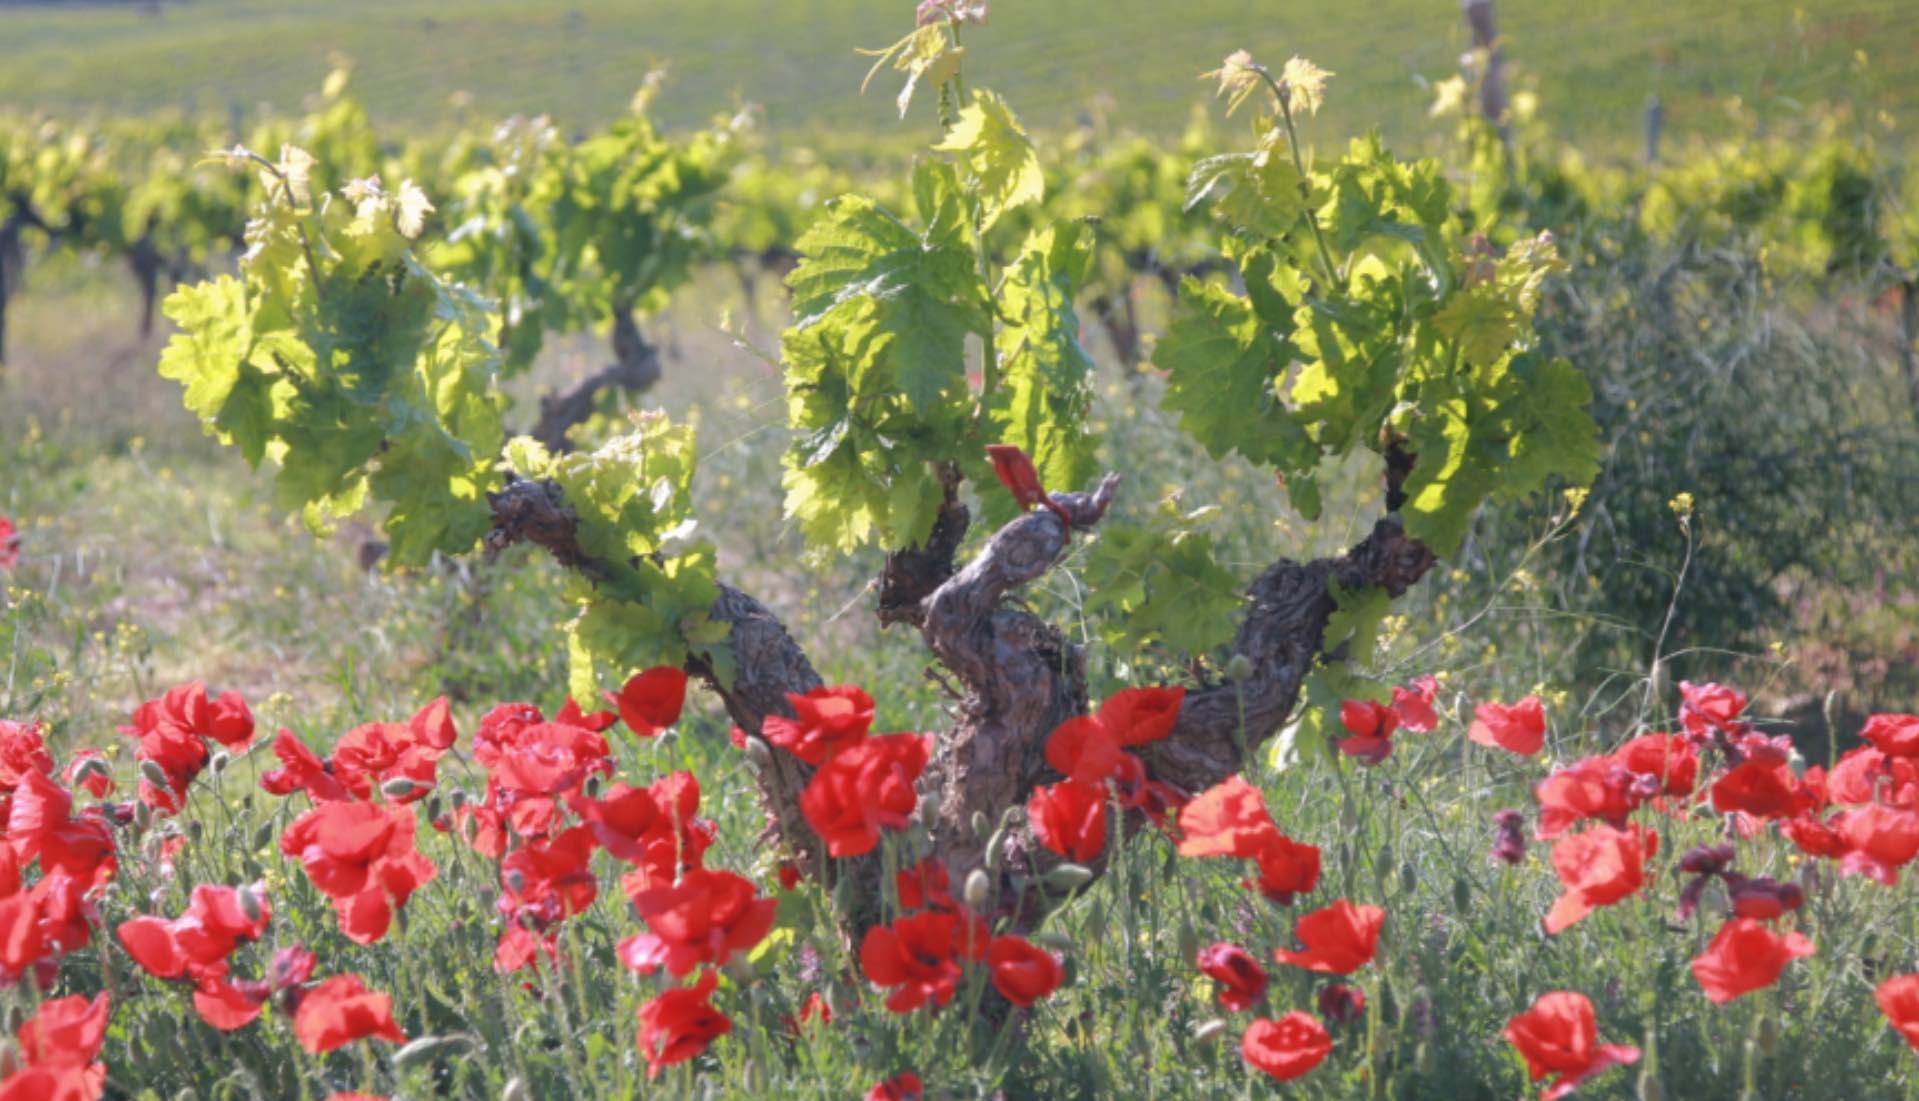 viticultura ecológica biodinámica la rioja sustentabilidad del ecosistema proteccion del medioambiente permacultura agroecología bienestar humano taste of rioja agencia comunicación